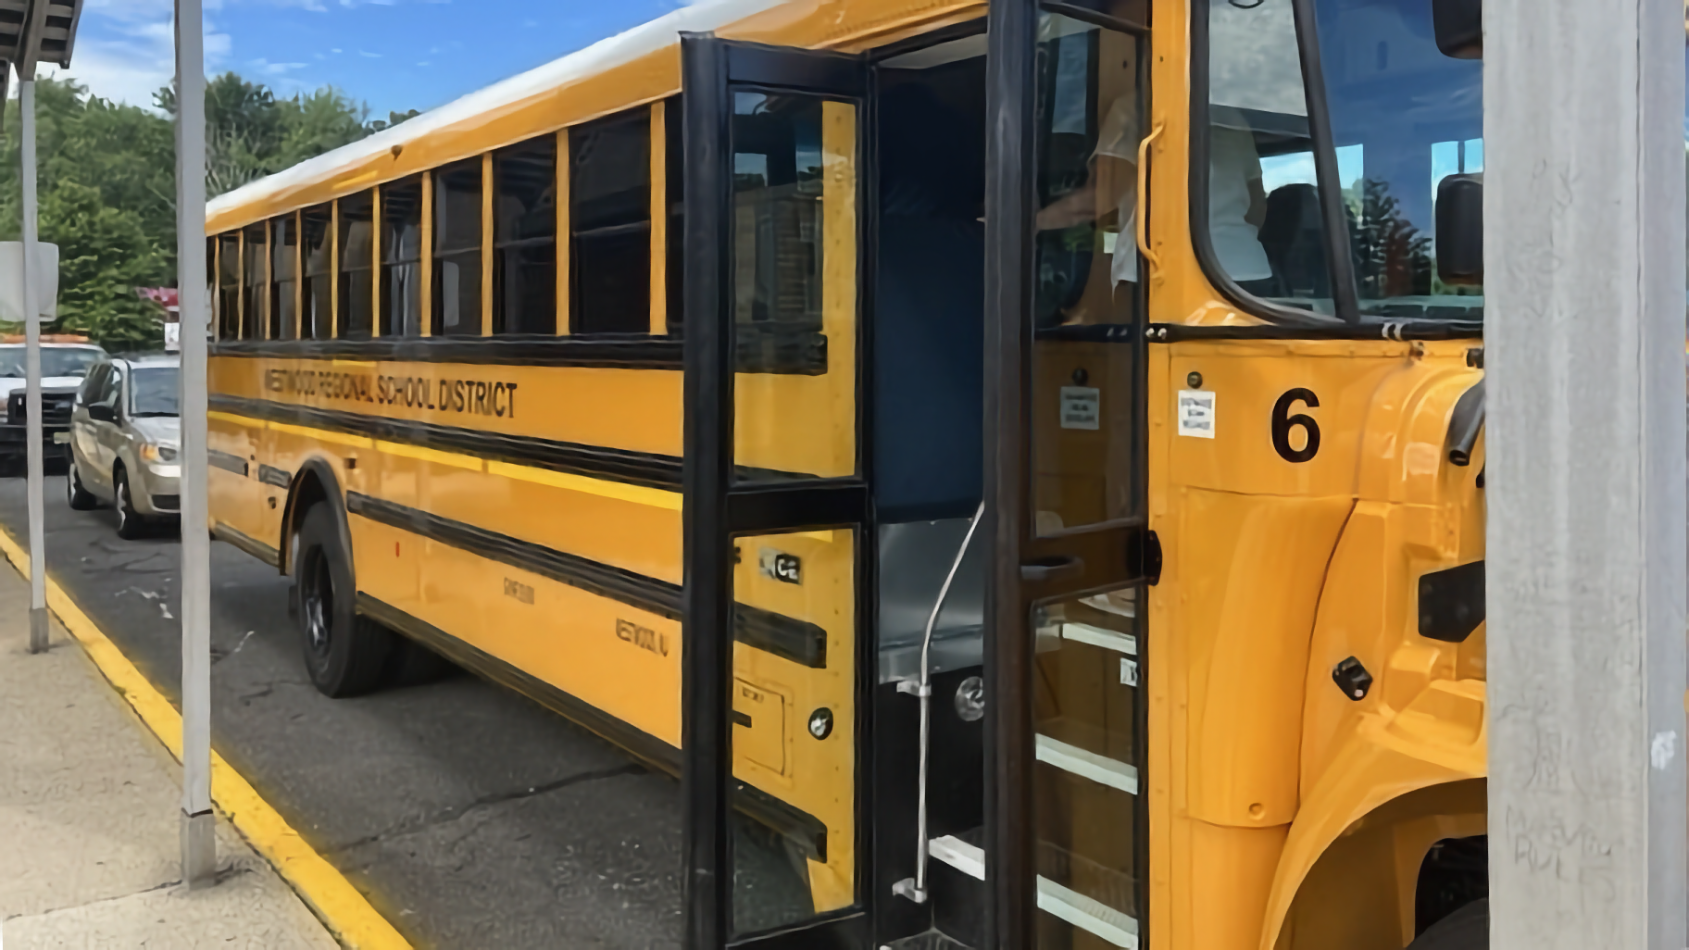 Bus Sex Video Villege - Washington School expansion planned â€” Pascack Press & Northern Valley Press